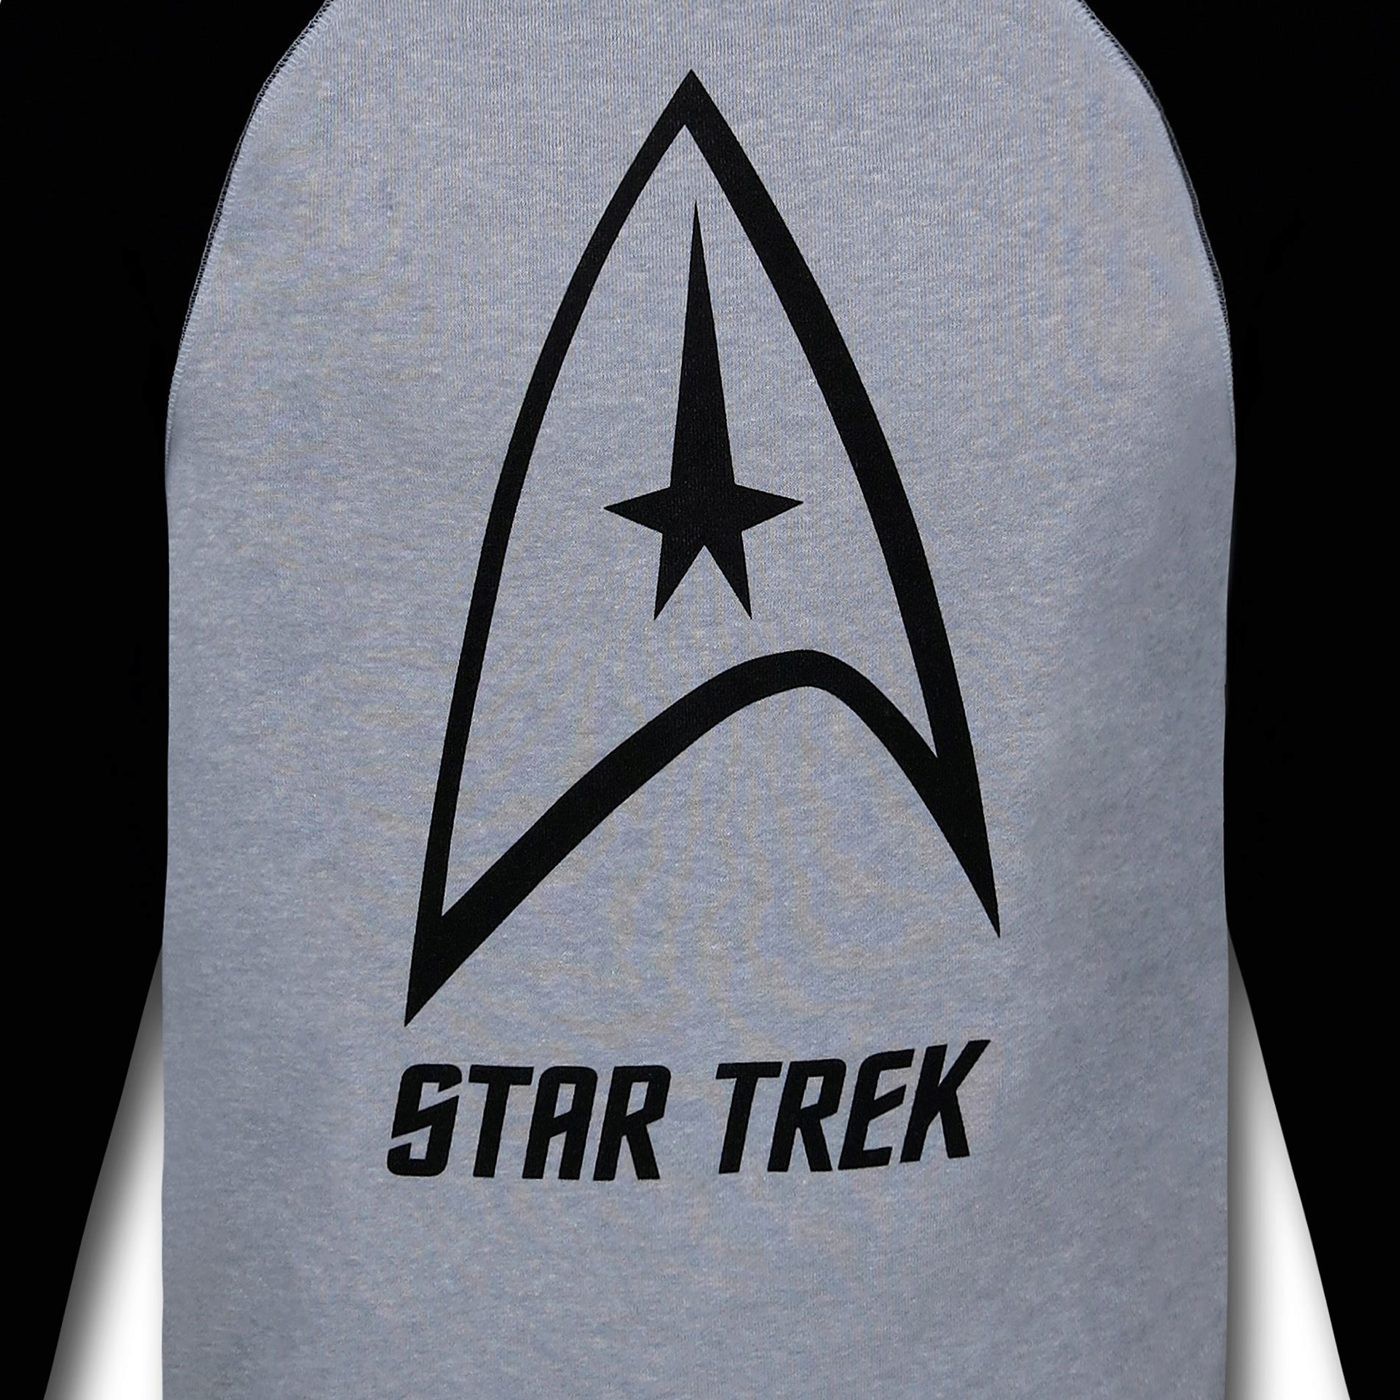 Star Trek Insignia Sweatshirt